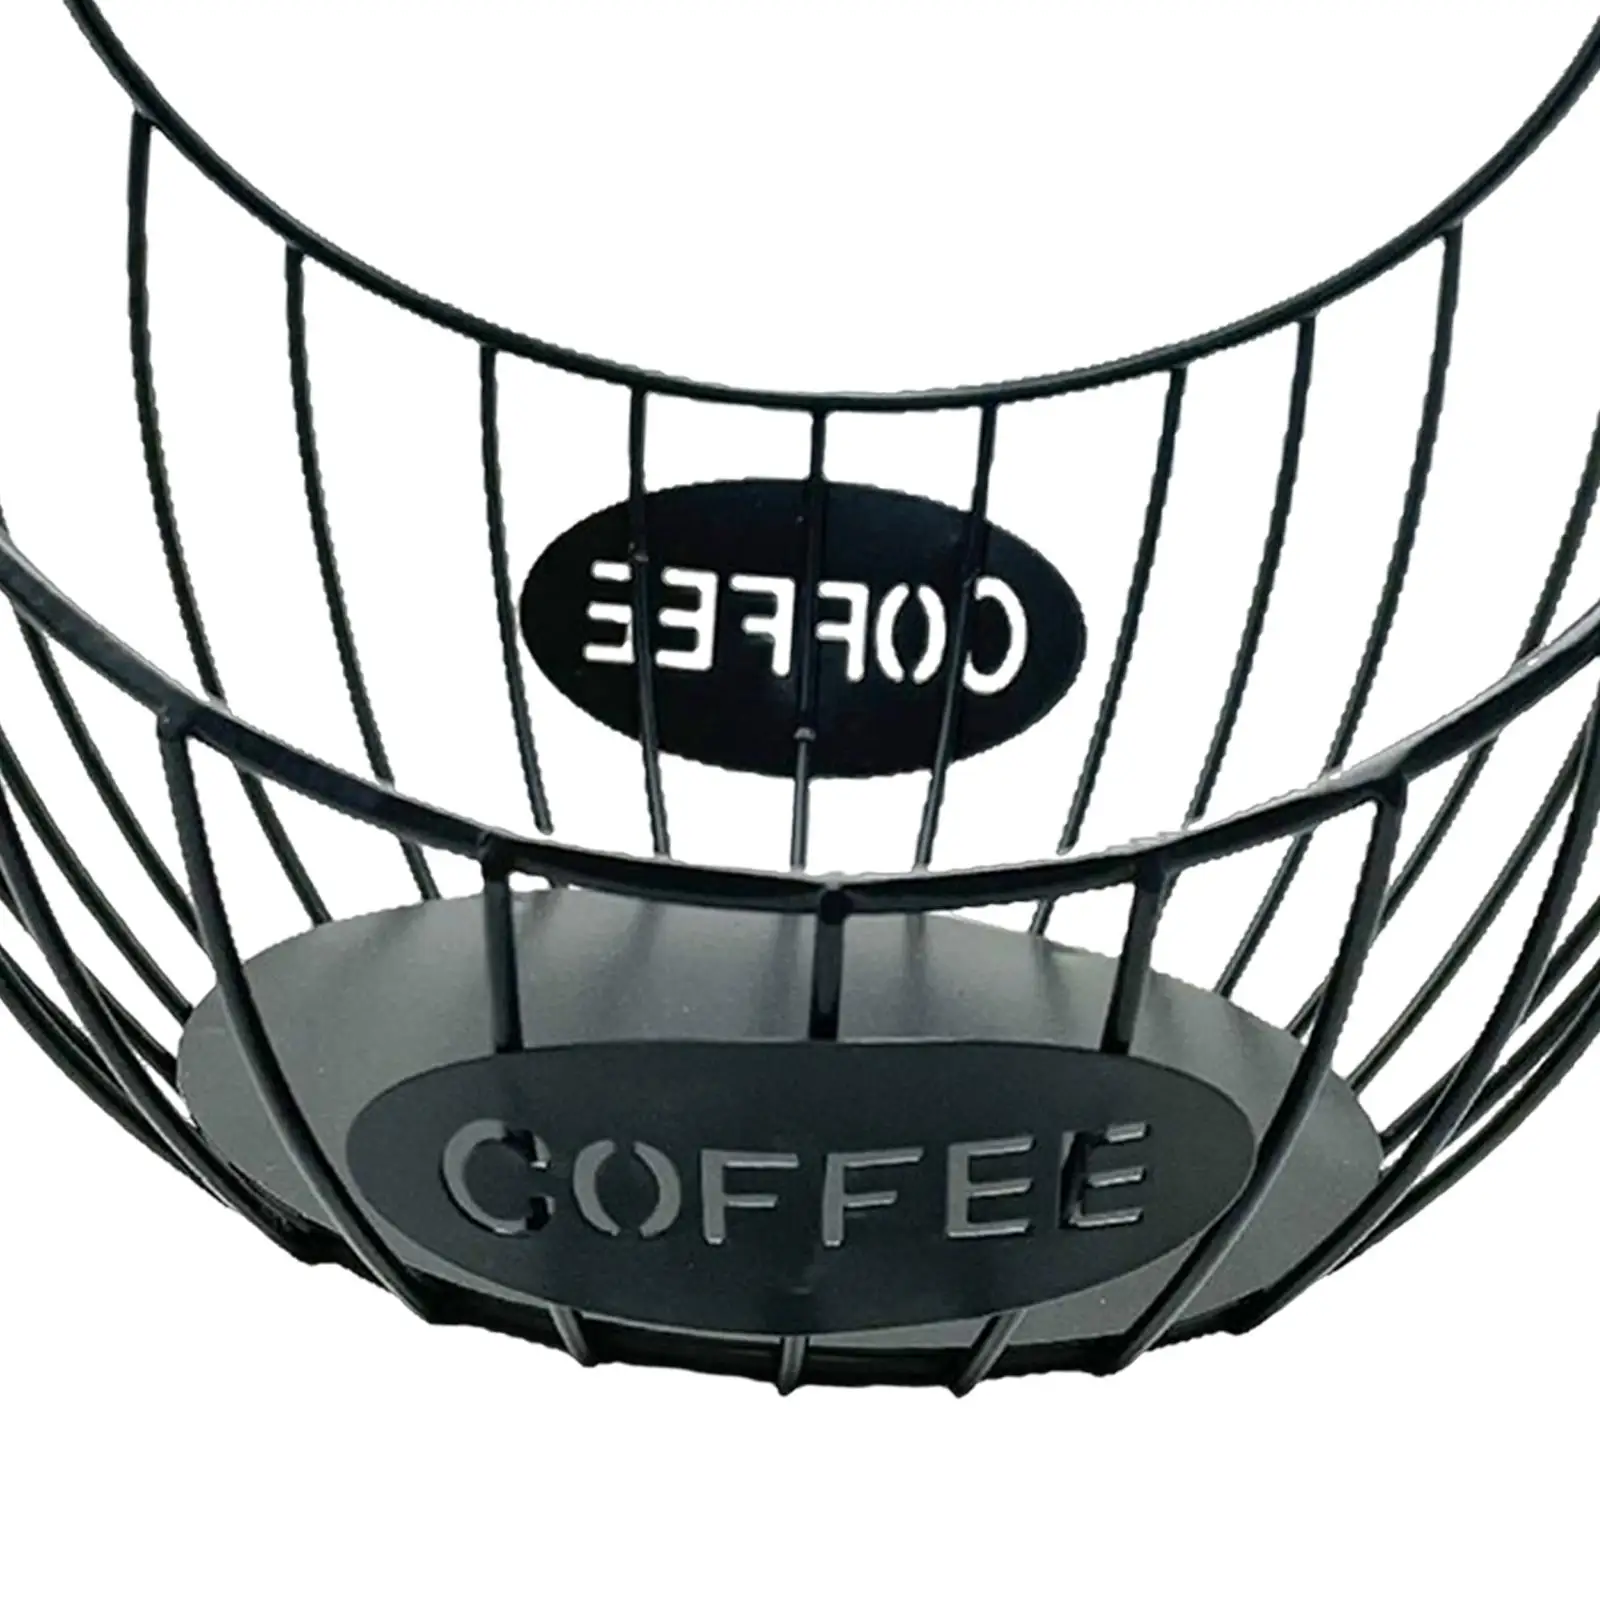 Coffee & Espresso Pod Holder Coffee Station Capsule Storage Basket for Home